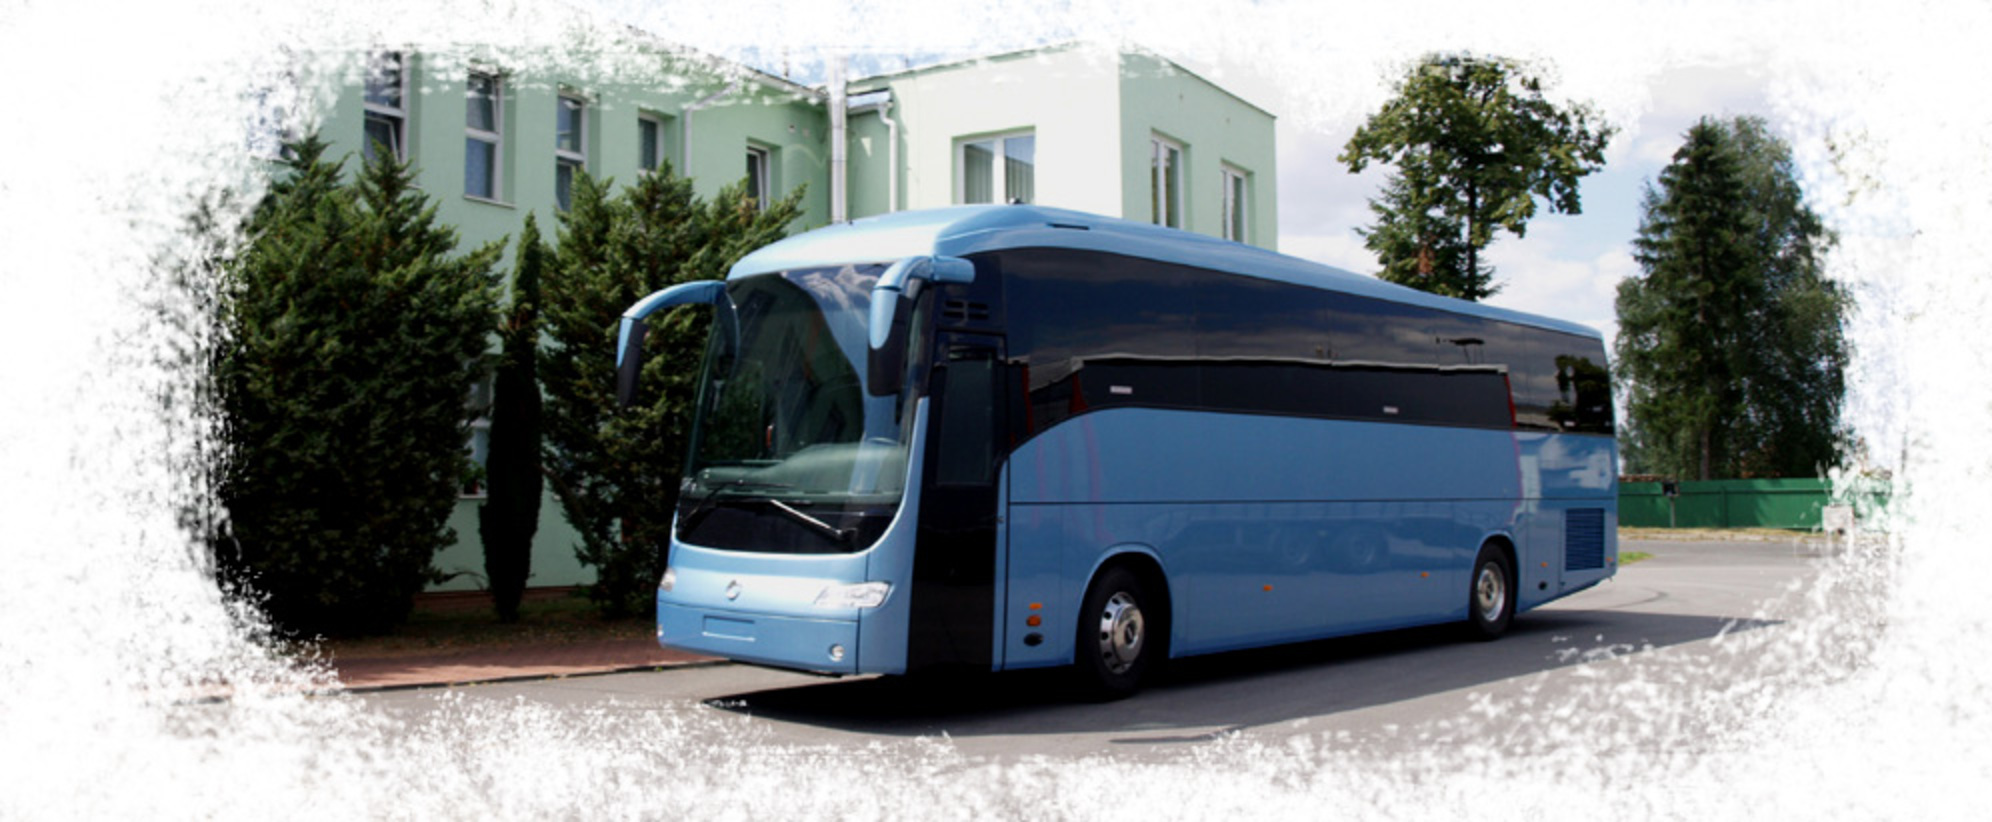 Karex Cerekvice -service of buses Irisbus, trucks Iveco and Volvo ...